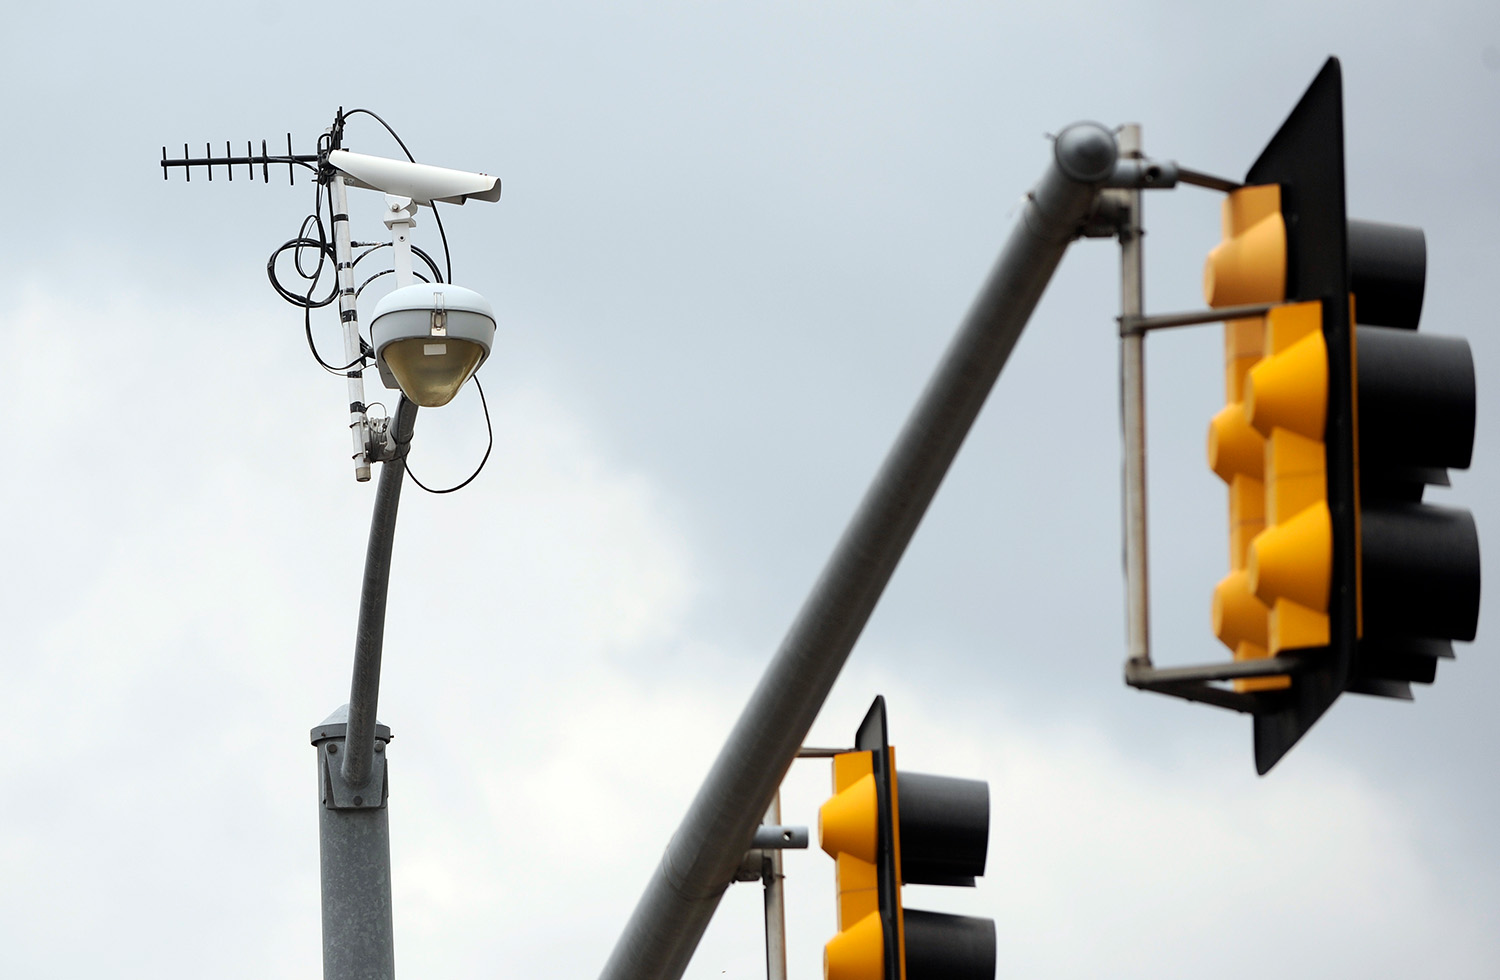 A traffic camera mounted atop a set of traffic lights in Aurora, Illinois with yagi antenna transmitter